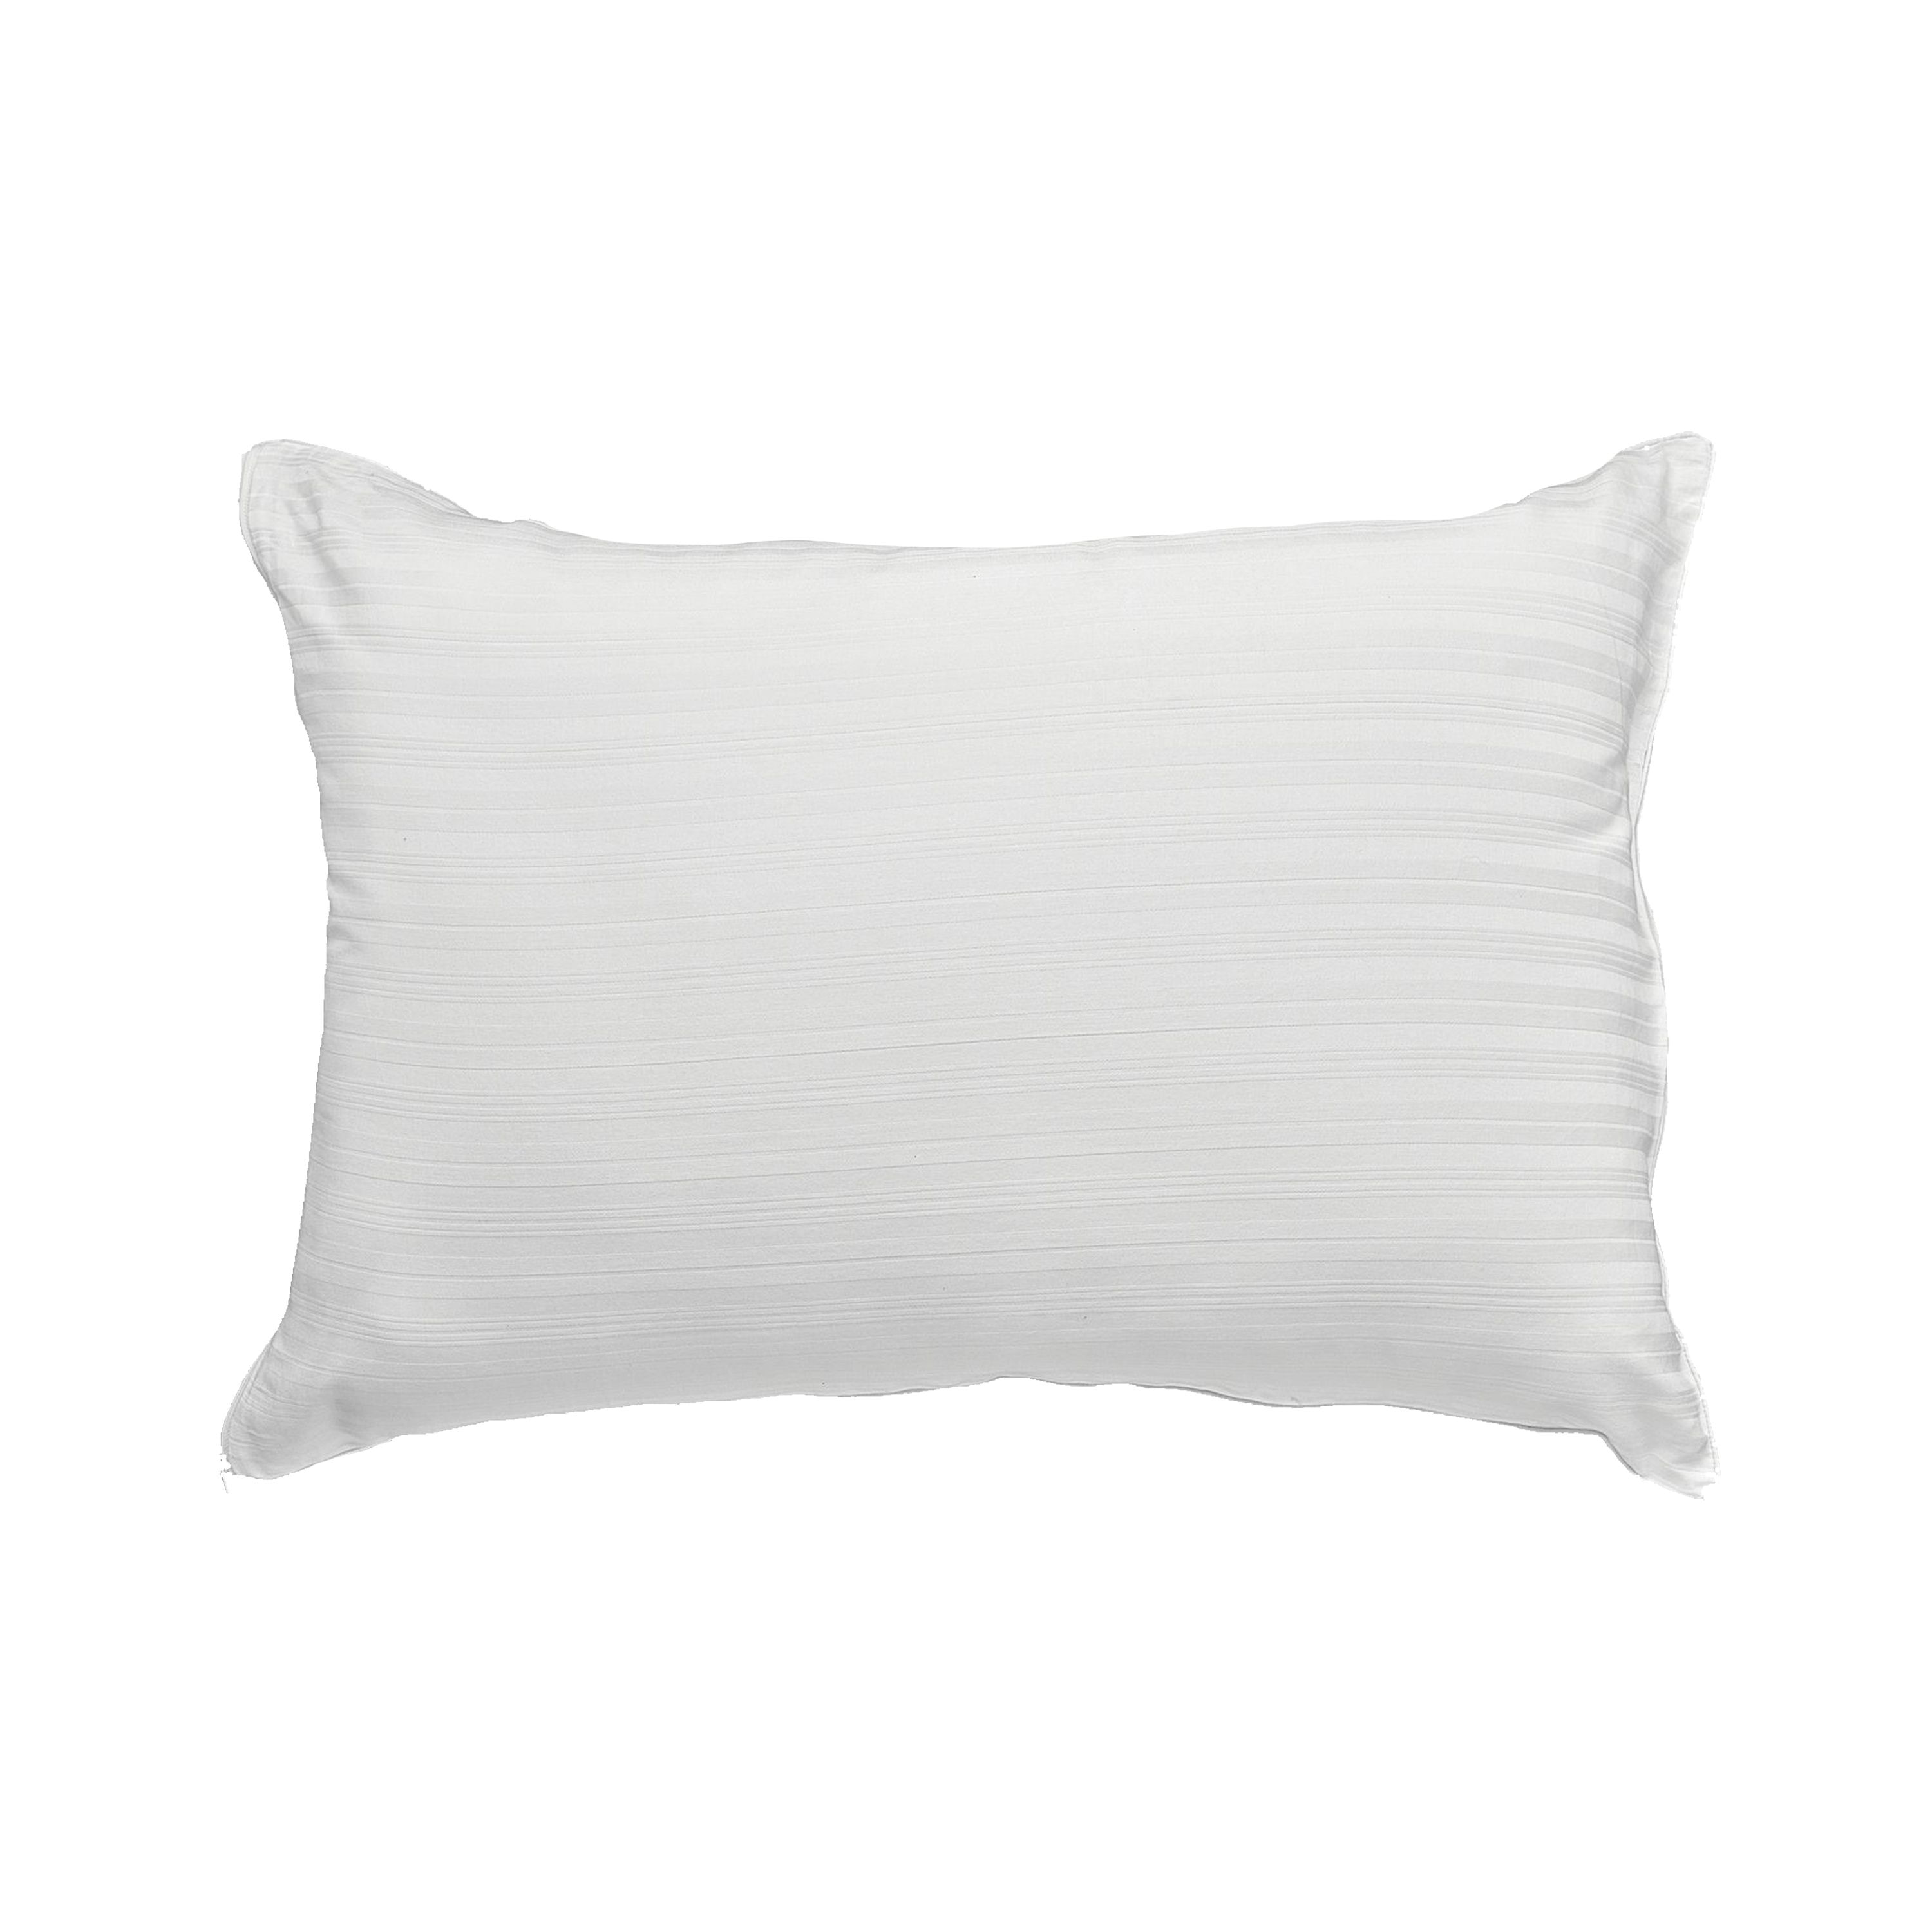 Jumbo Size Pillow Protectors - Bed Bath & Beyond